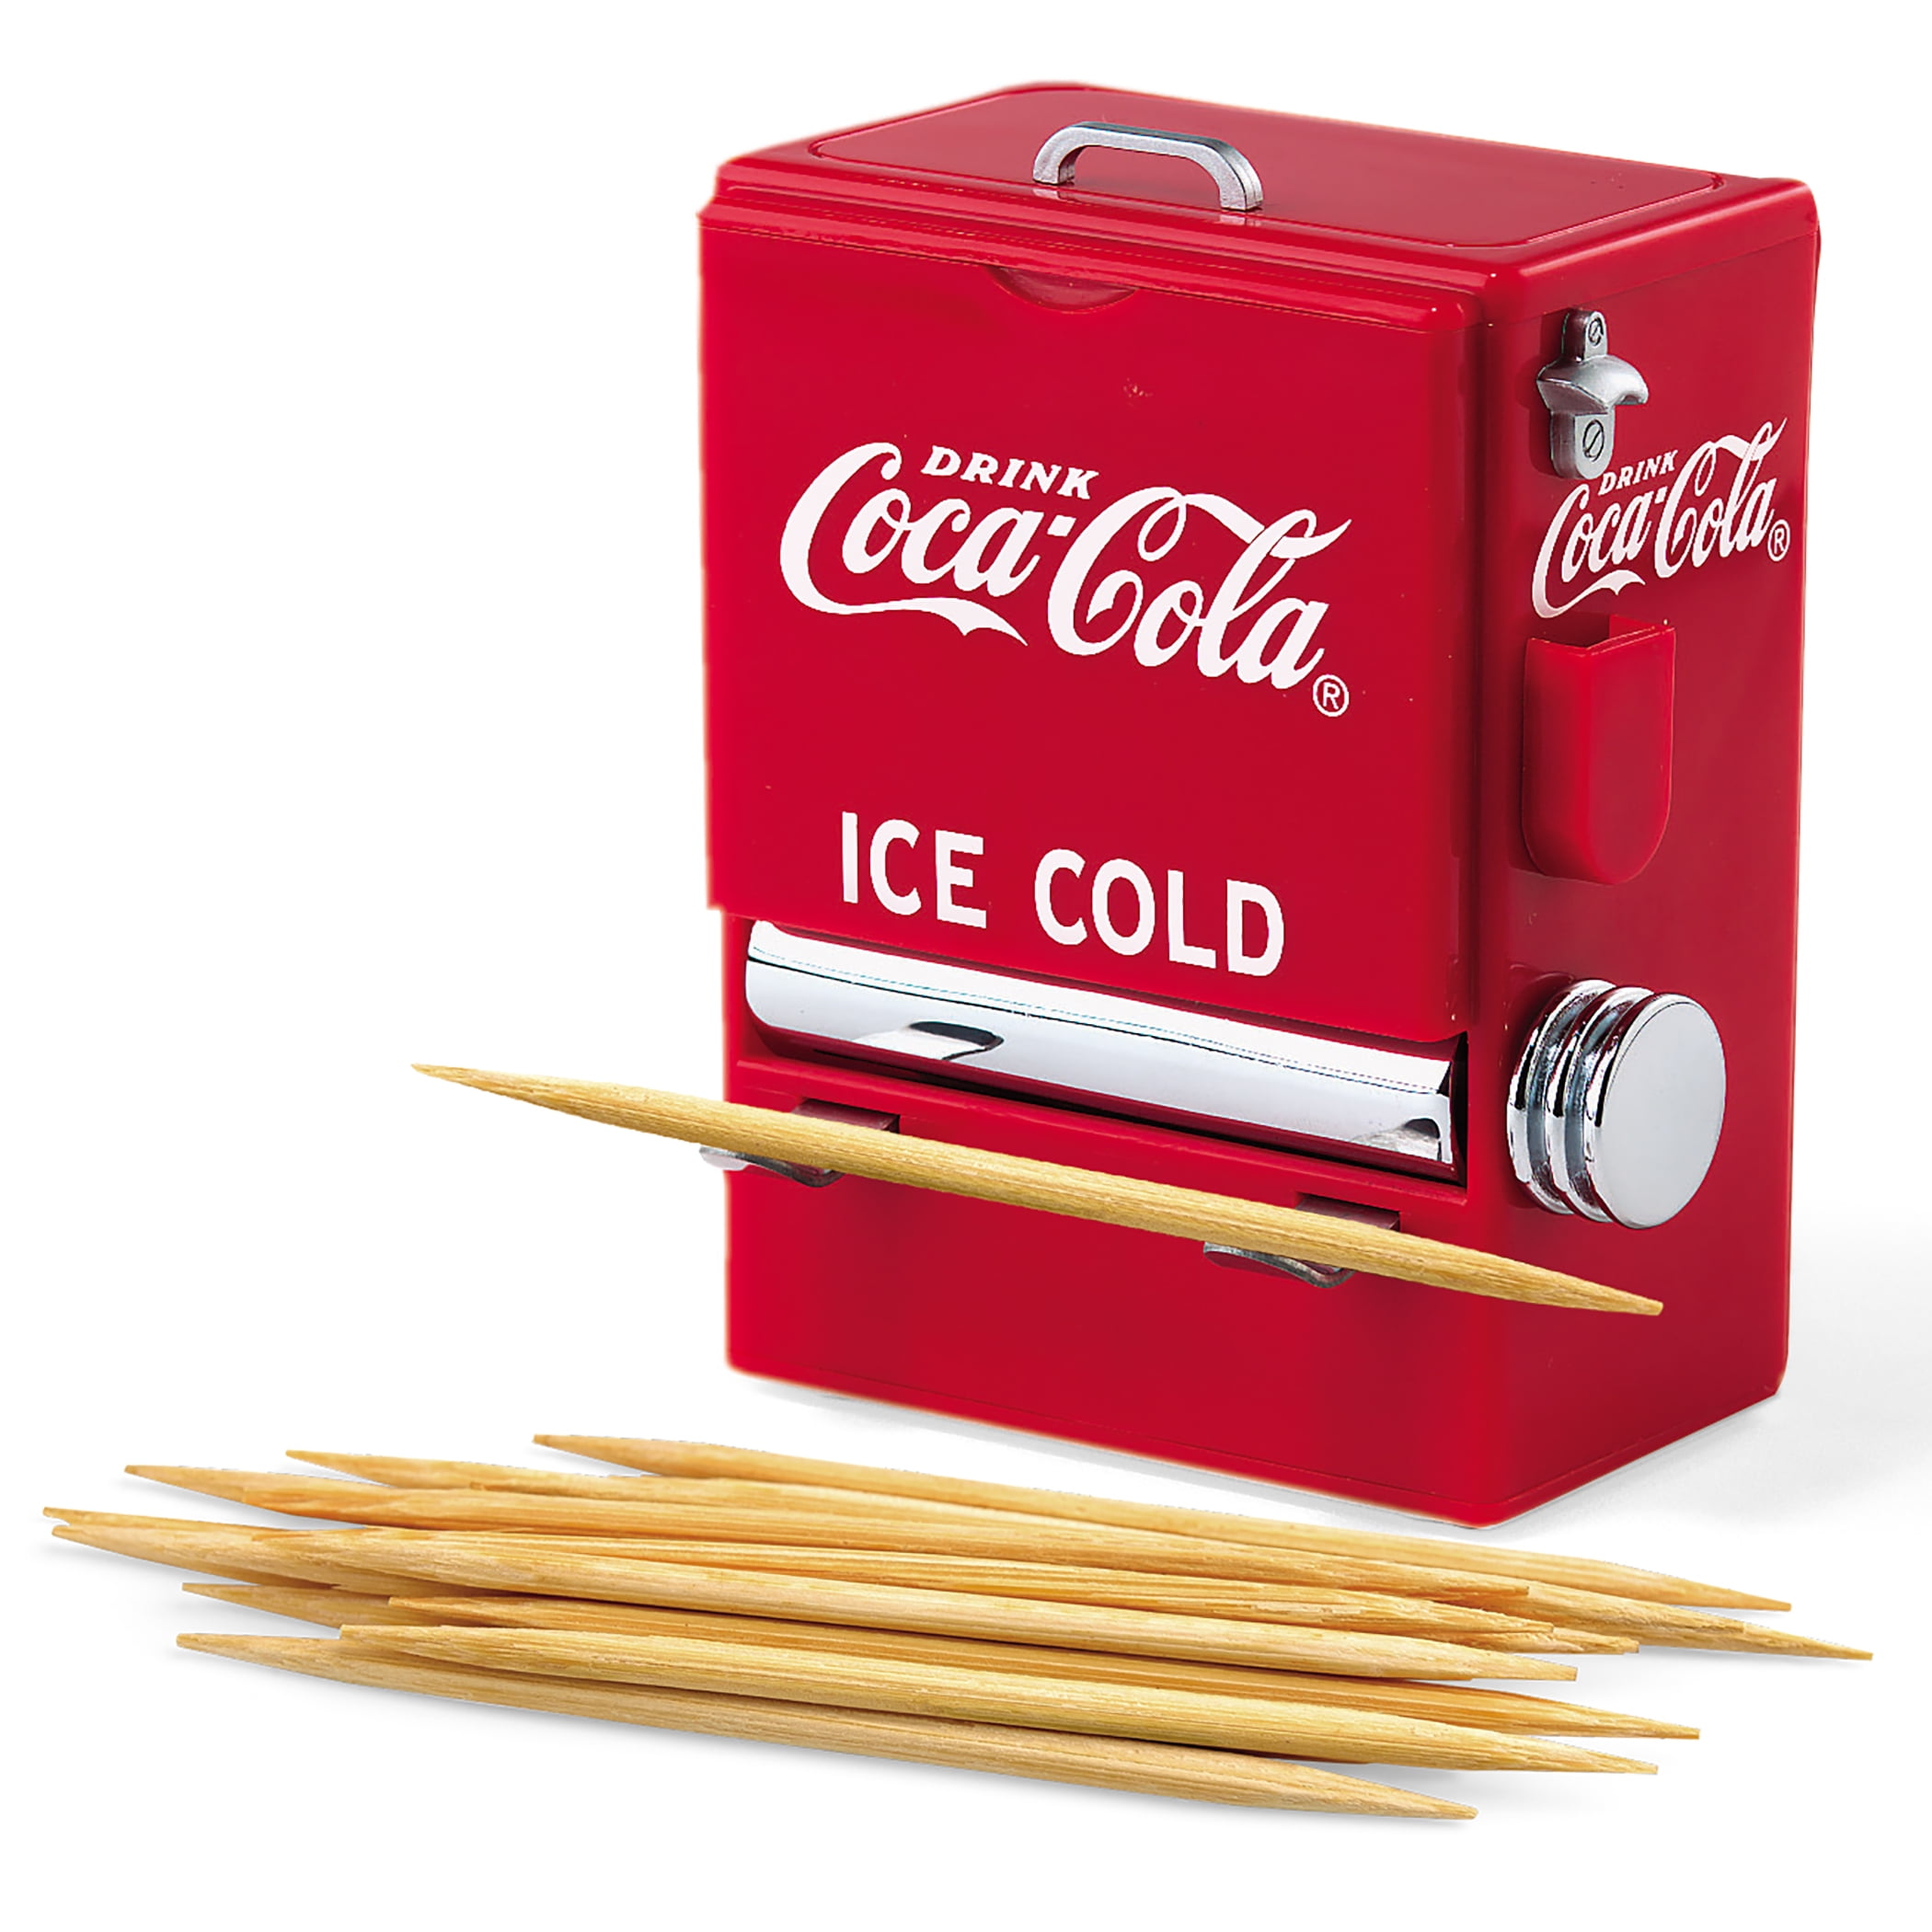 Toothpick dispenser toothpick holder Tablecraft CC304 Coke Vending Machine Toothpick Dispenser Japan import